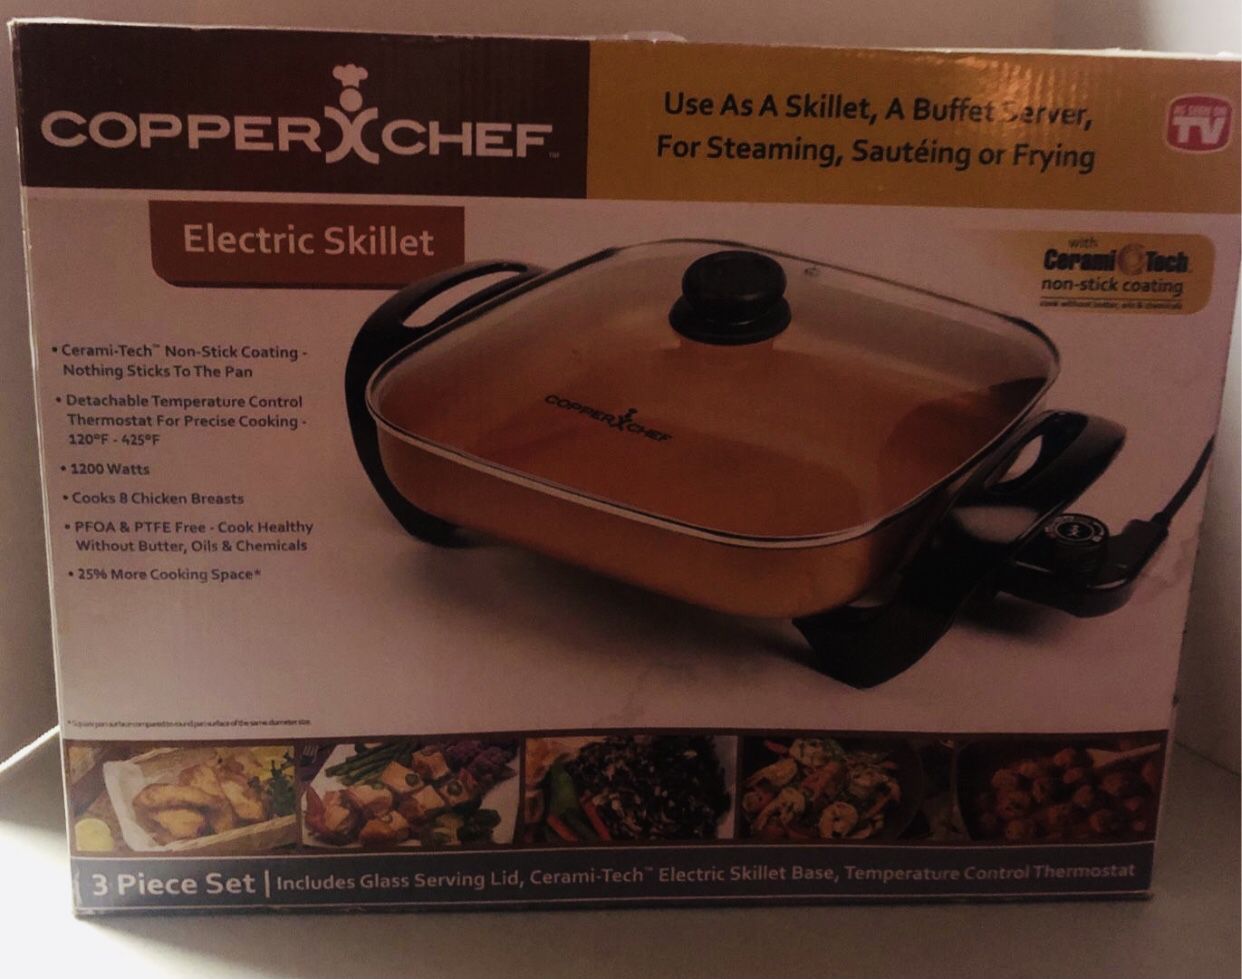 Copper Chef Electric Skillet